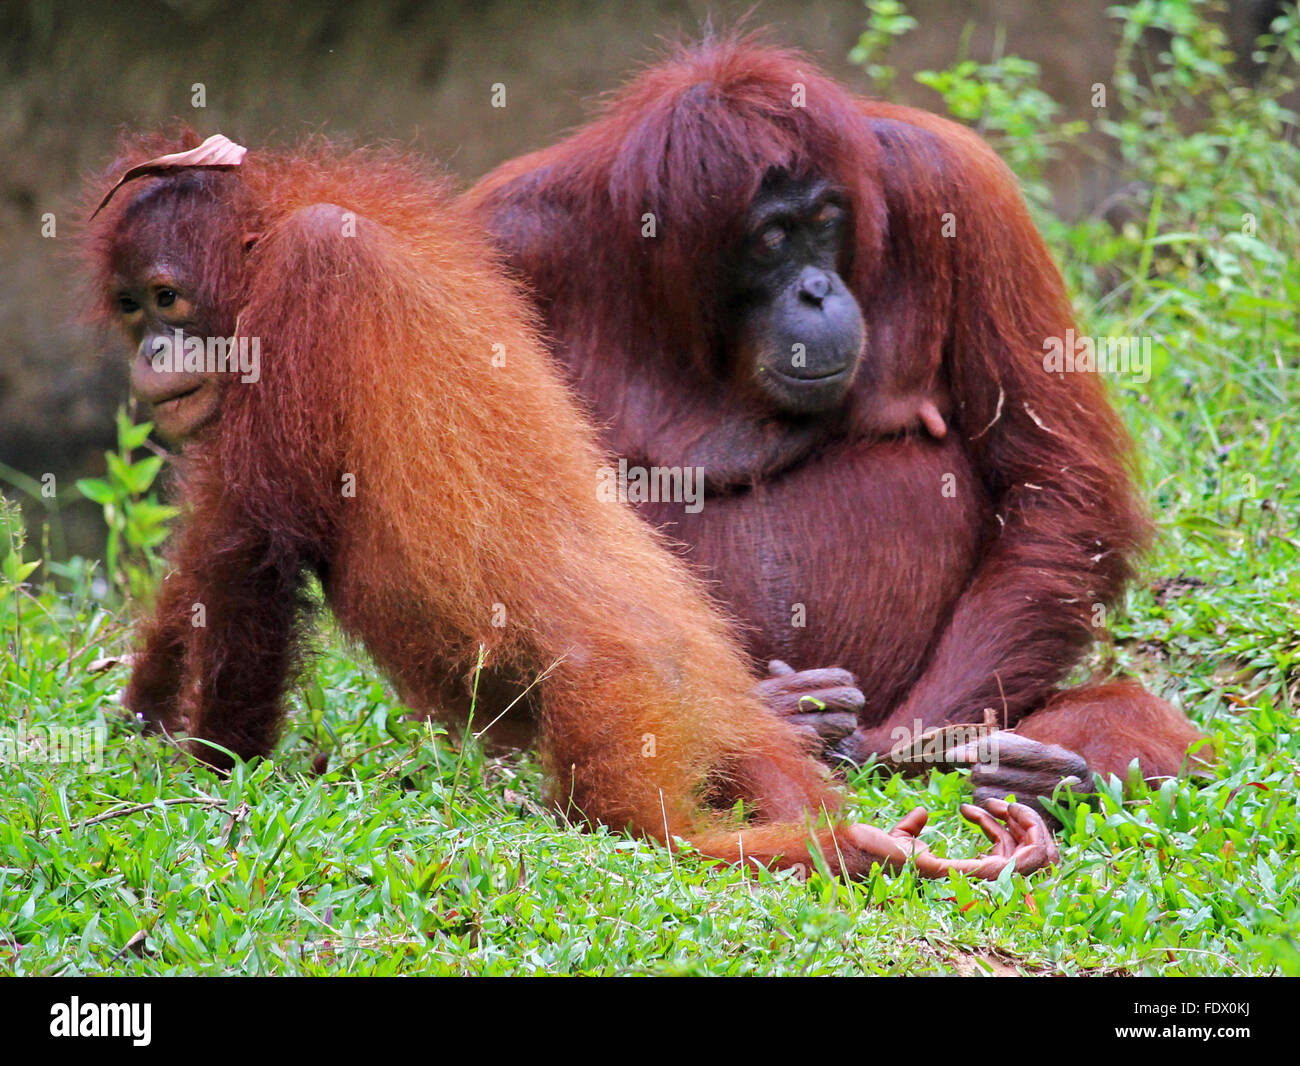 Potrrait of a senior orangutan with a baby in the region of Sabah, Borneo. Stock Photo